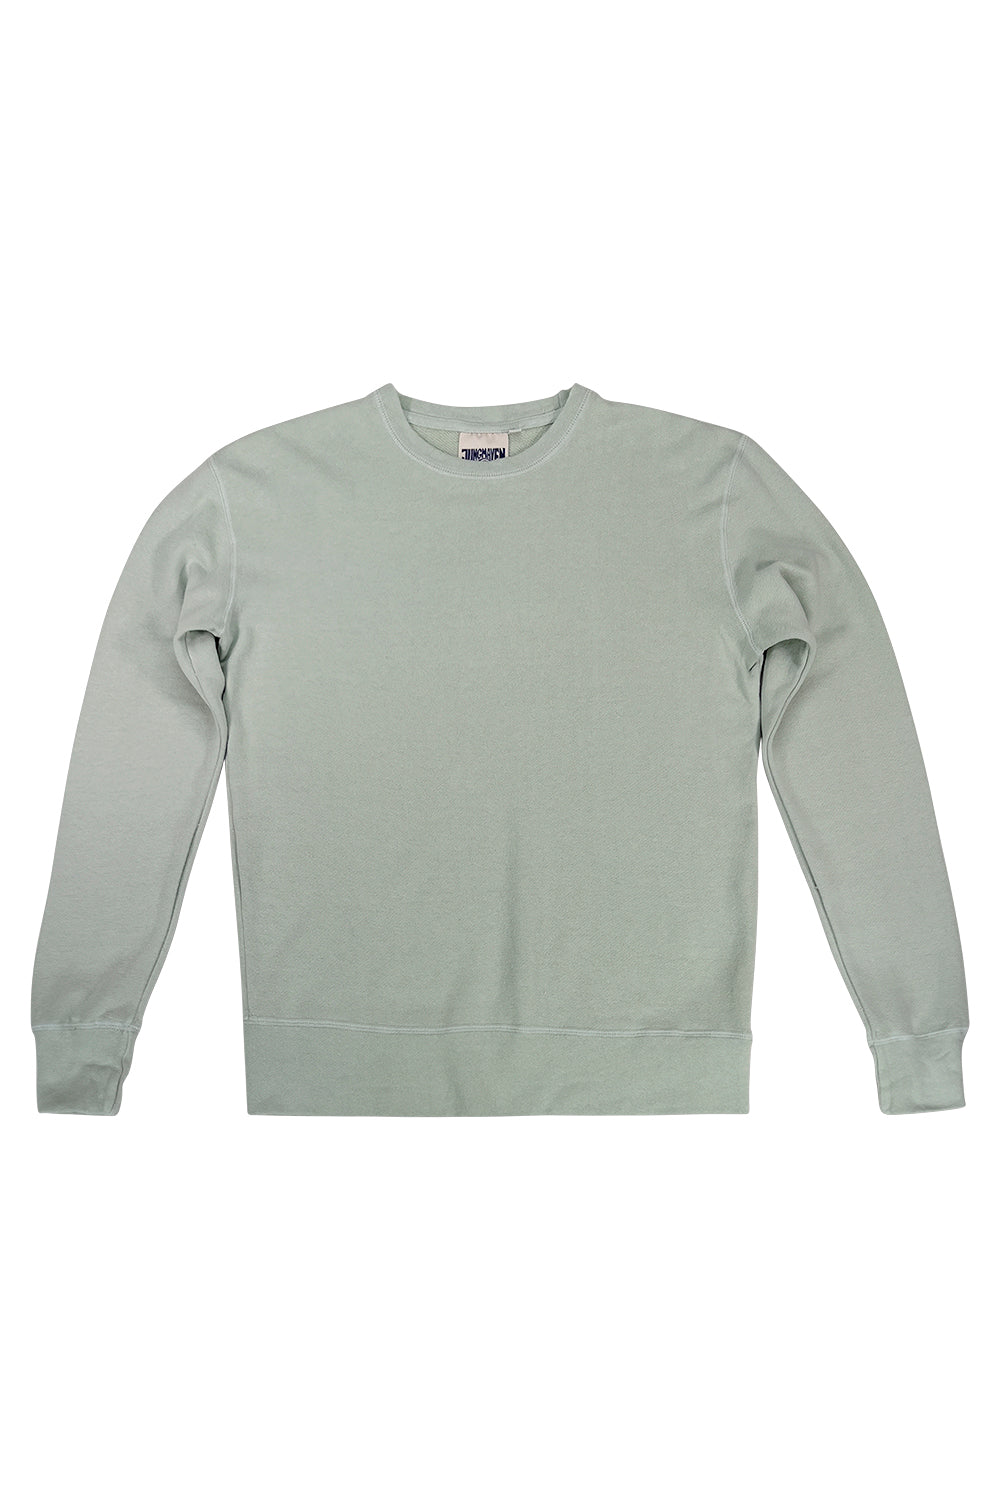 Tahoe Sweatshirt | Jungmaven Hemp Clothing & Accessories / Color: Seafoam Green